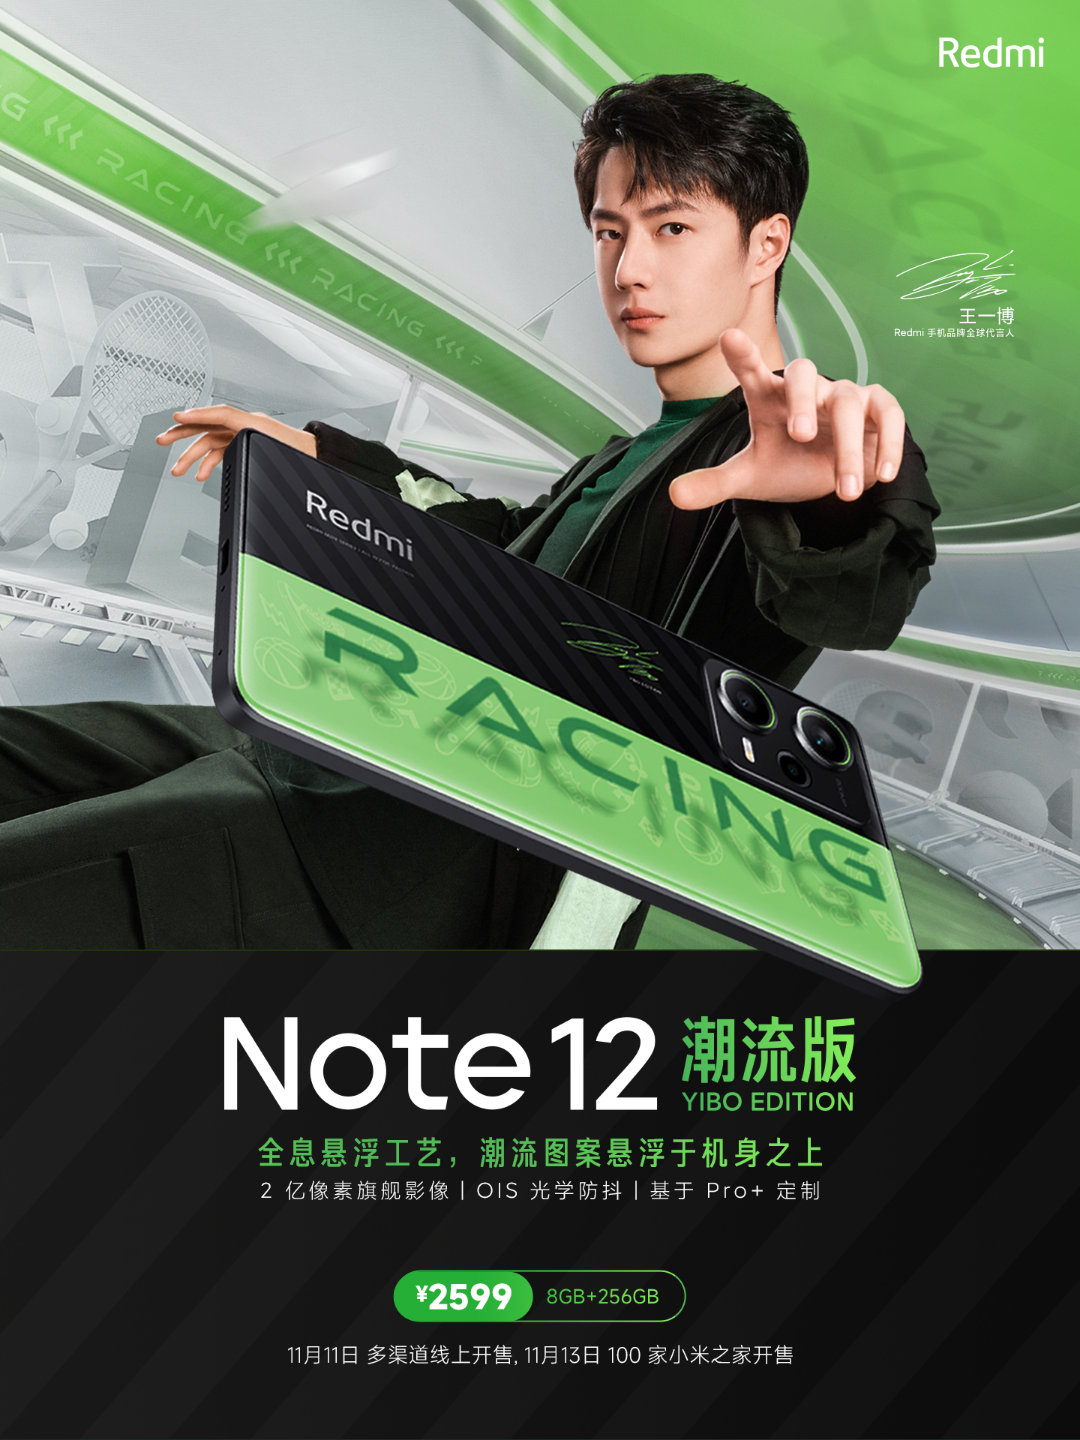 tin-tuc/xiaomi-redmi-note-12-racing-edition-voi-sac-nhanh-210w-ra-mat.html